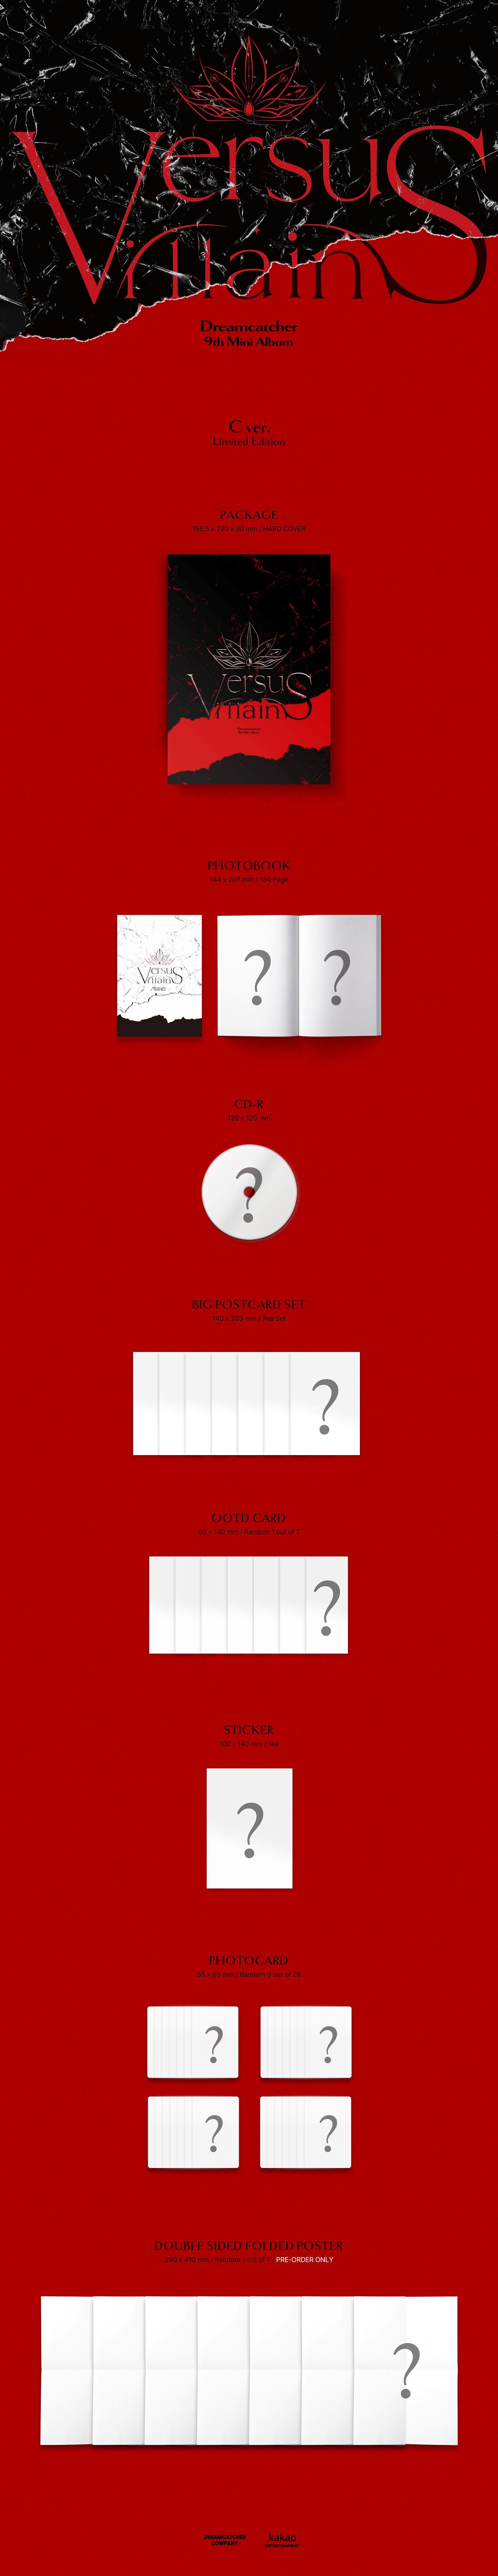 [PRE-ORDER] Dreamcatcher - 9th Mini Album VillainS (C ver. Limited) kpop merch product album girl group 드림캐쳐 south korea giveaway release pre order limited